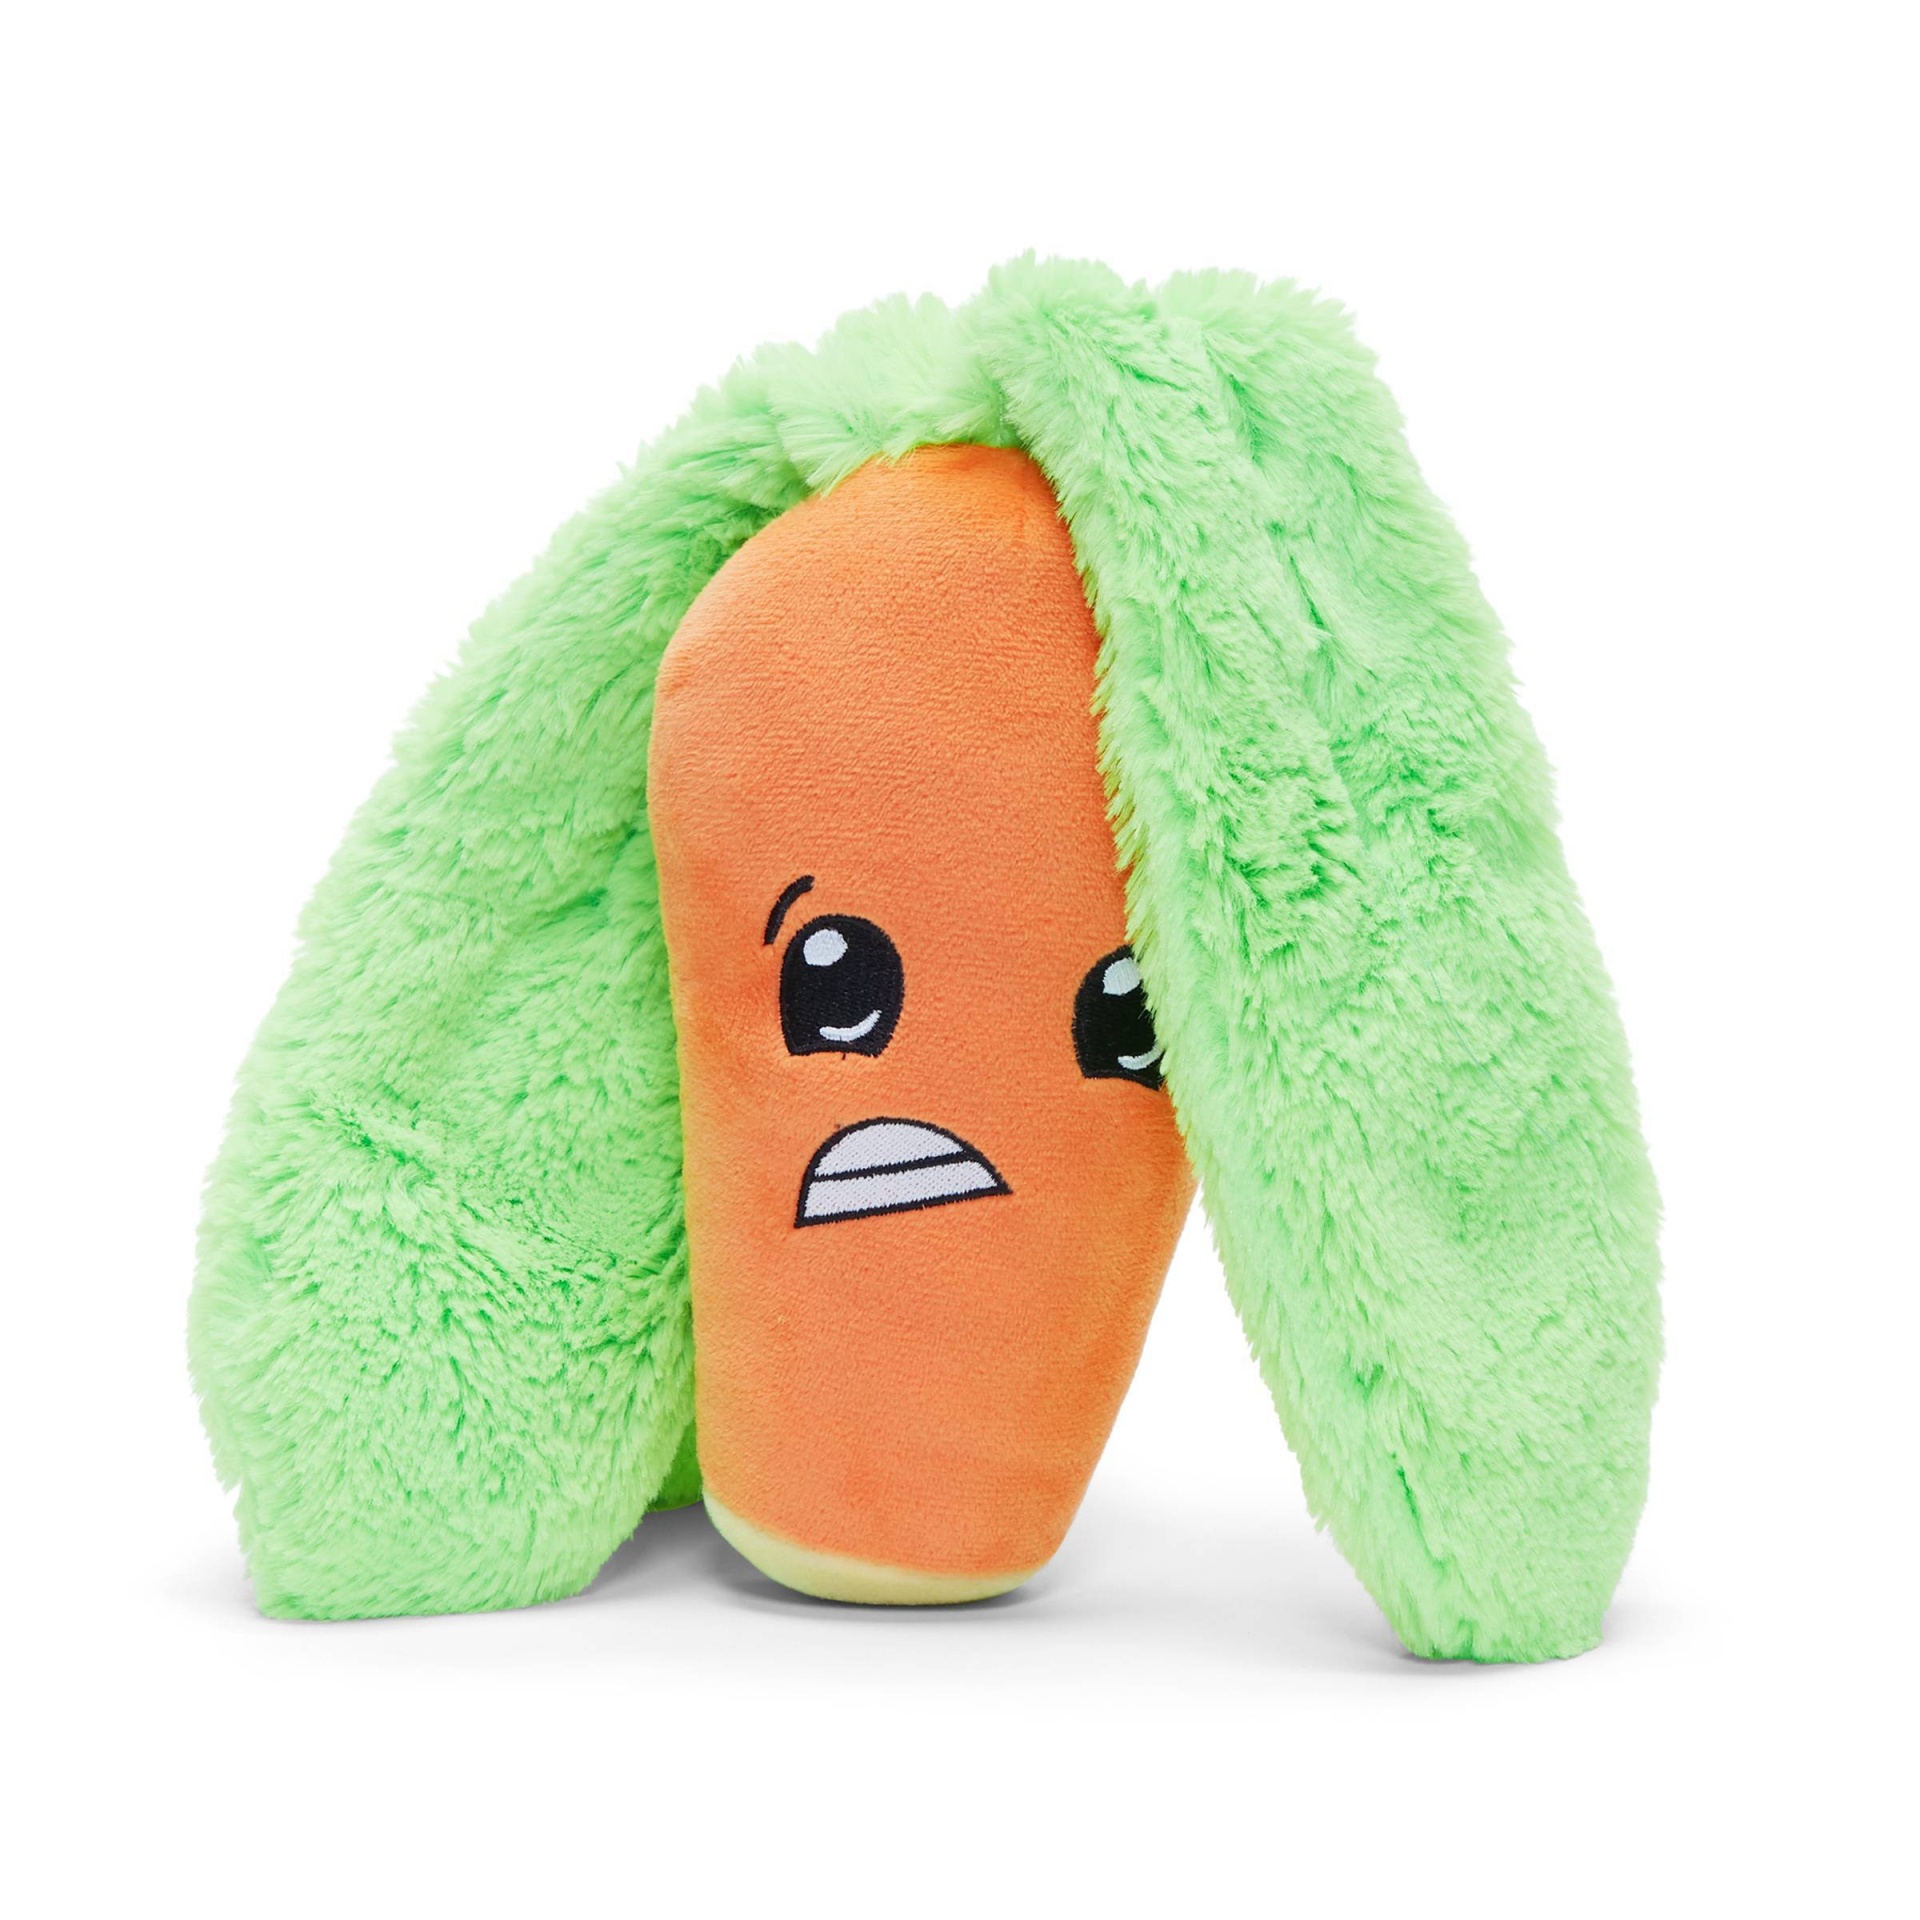 BARK carrot dog toy - Clarence the Careless Carrot 1 ct